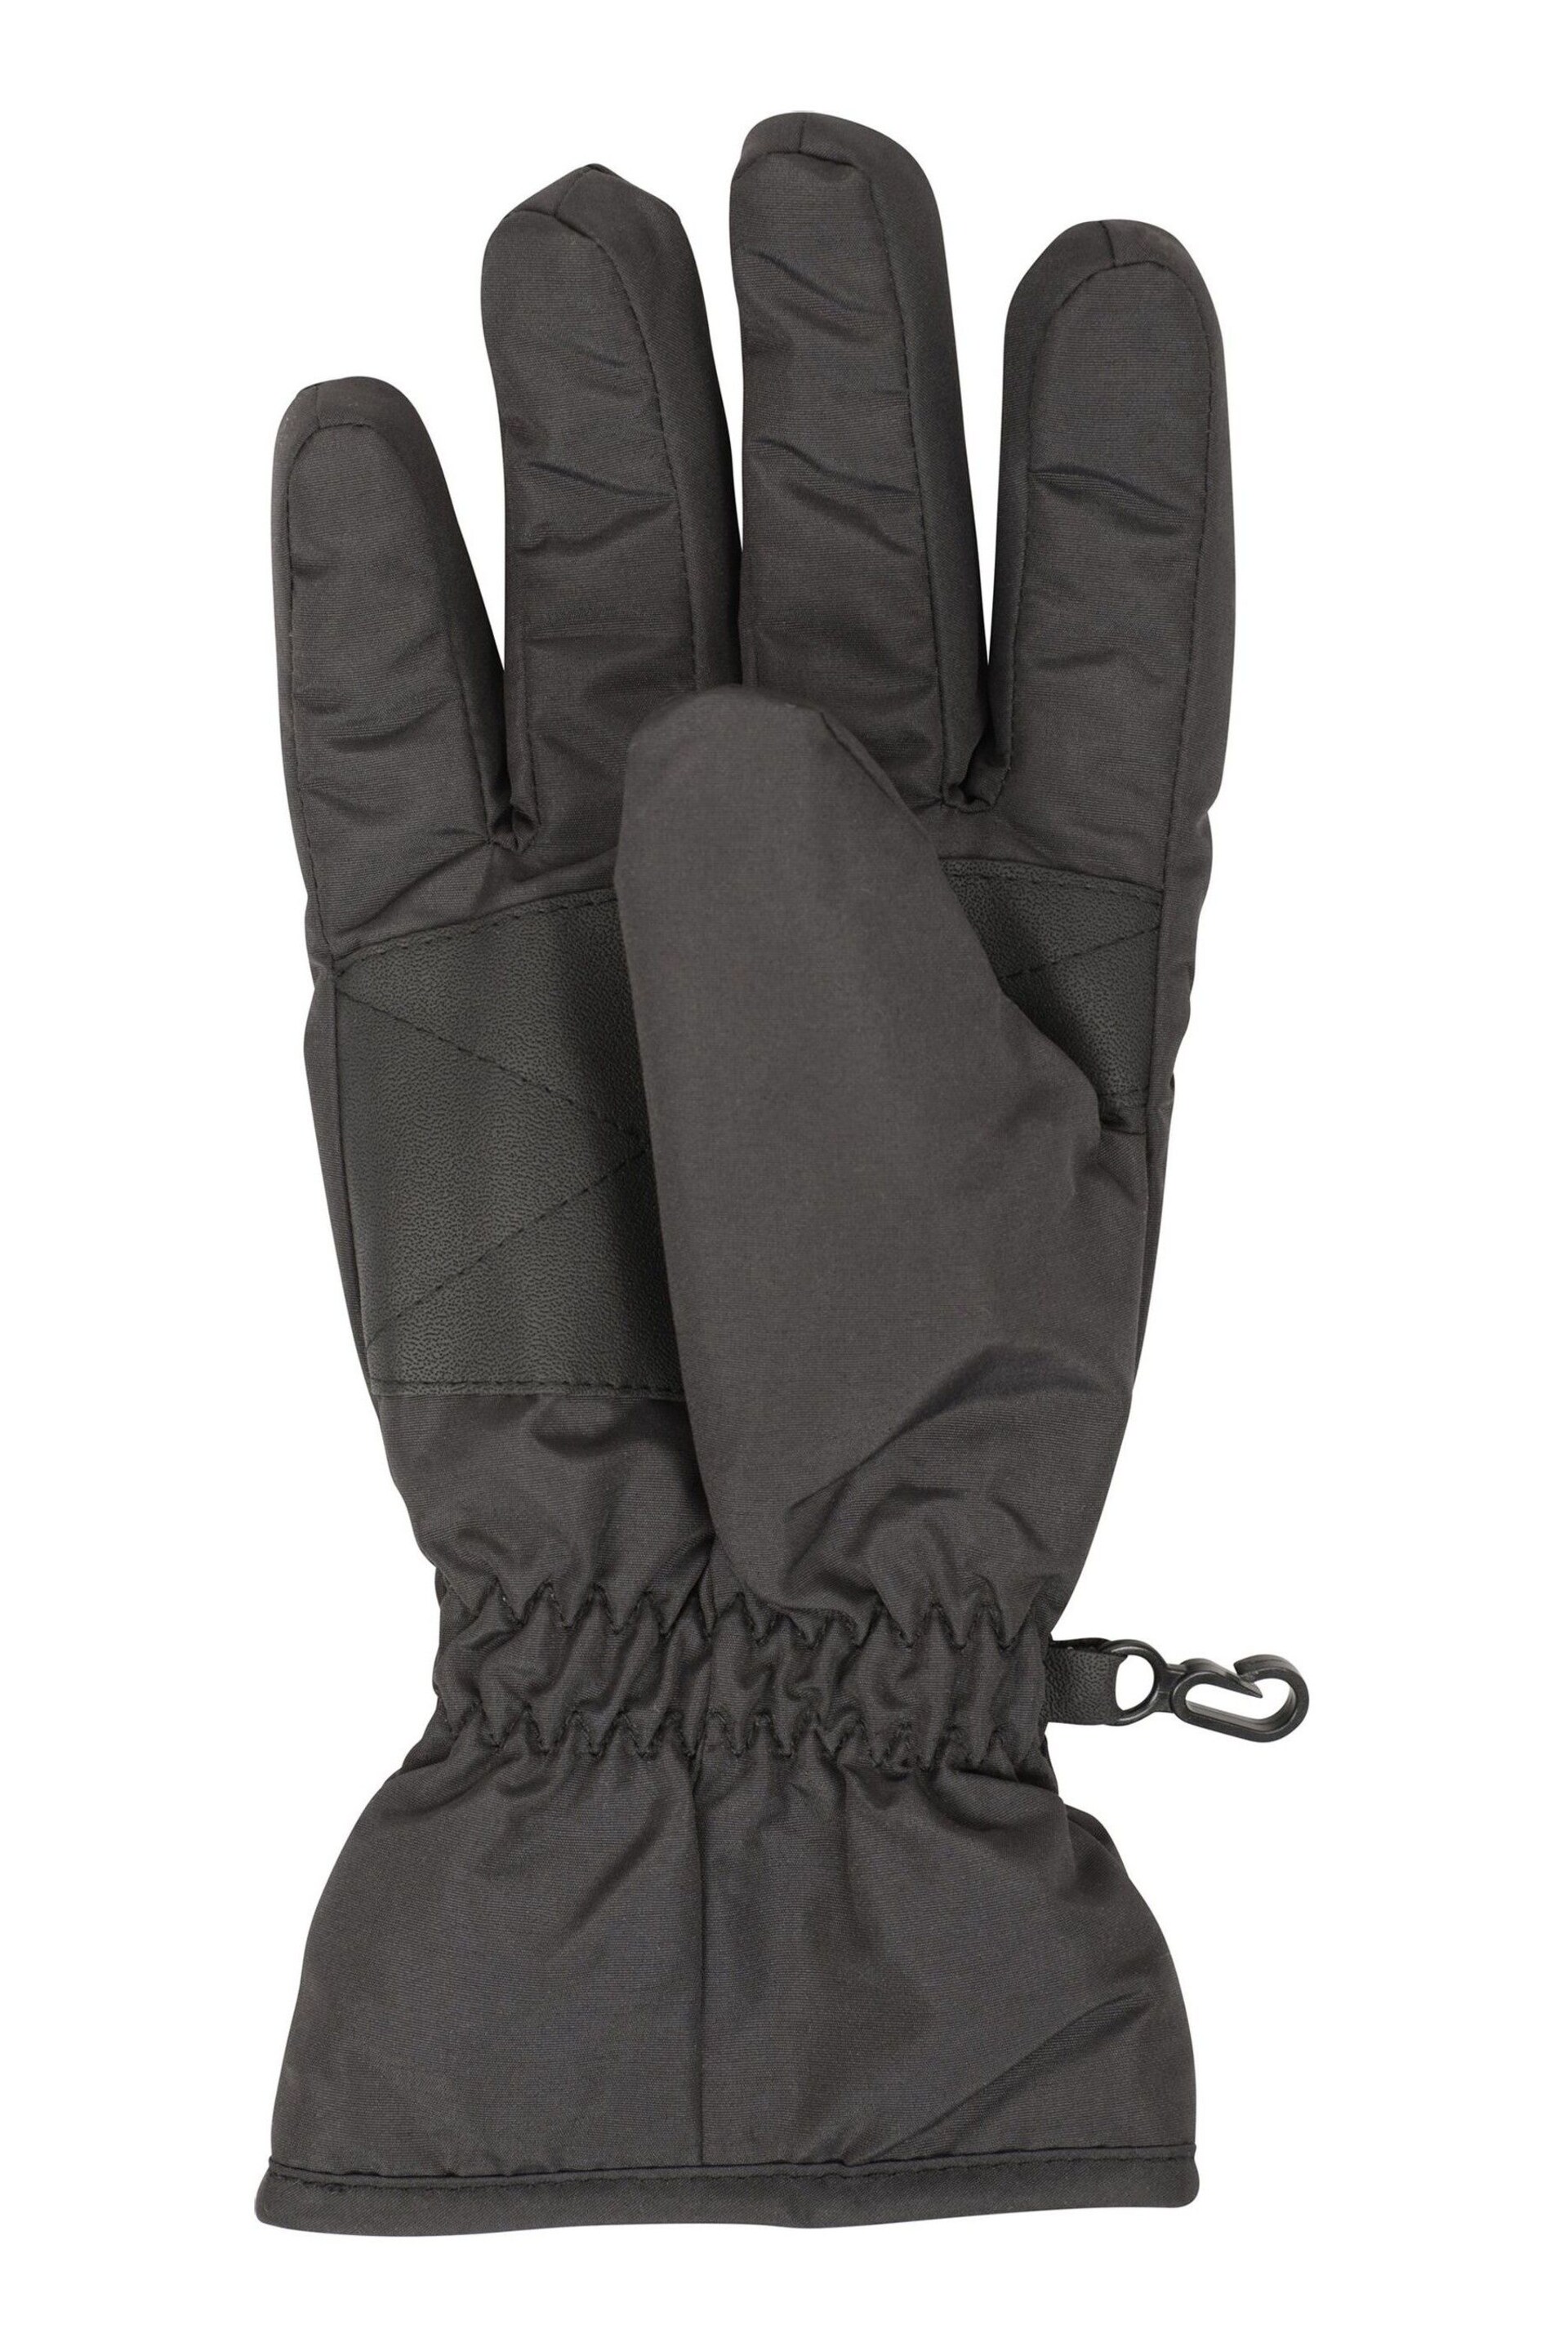 Mountain Warehouse Black Womens Ski Gloves - Image 5 of 5